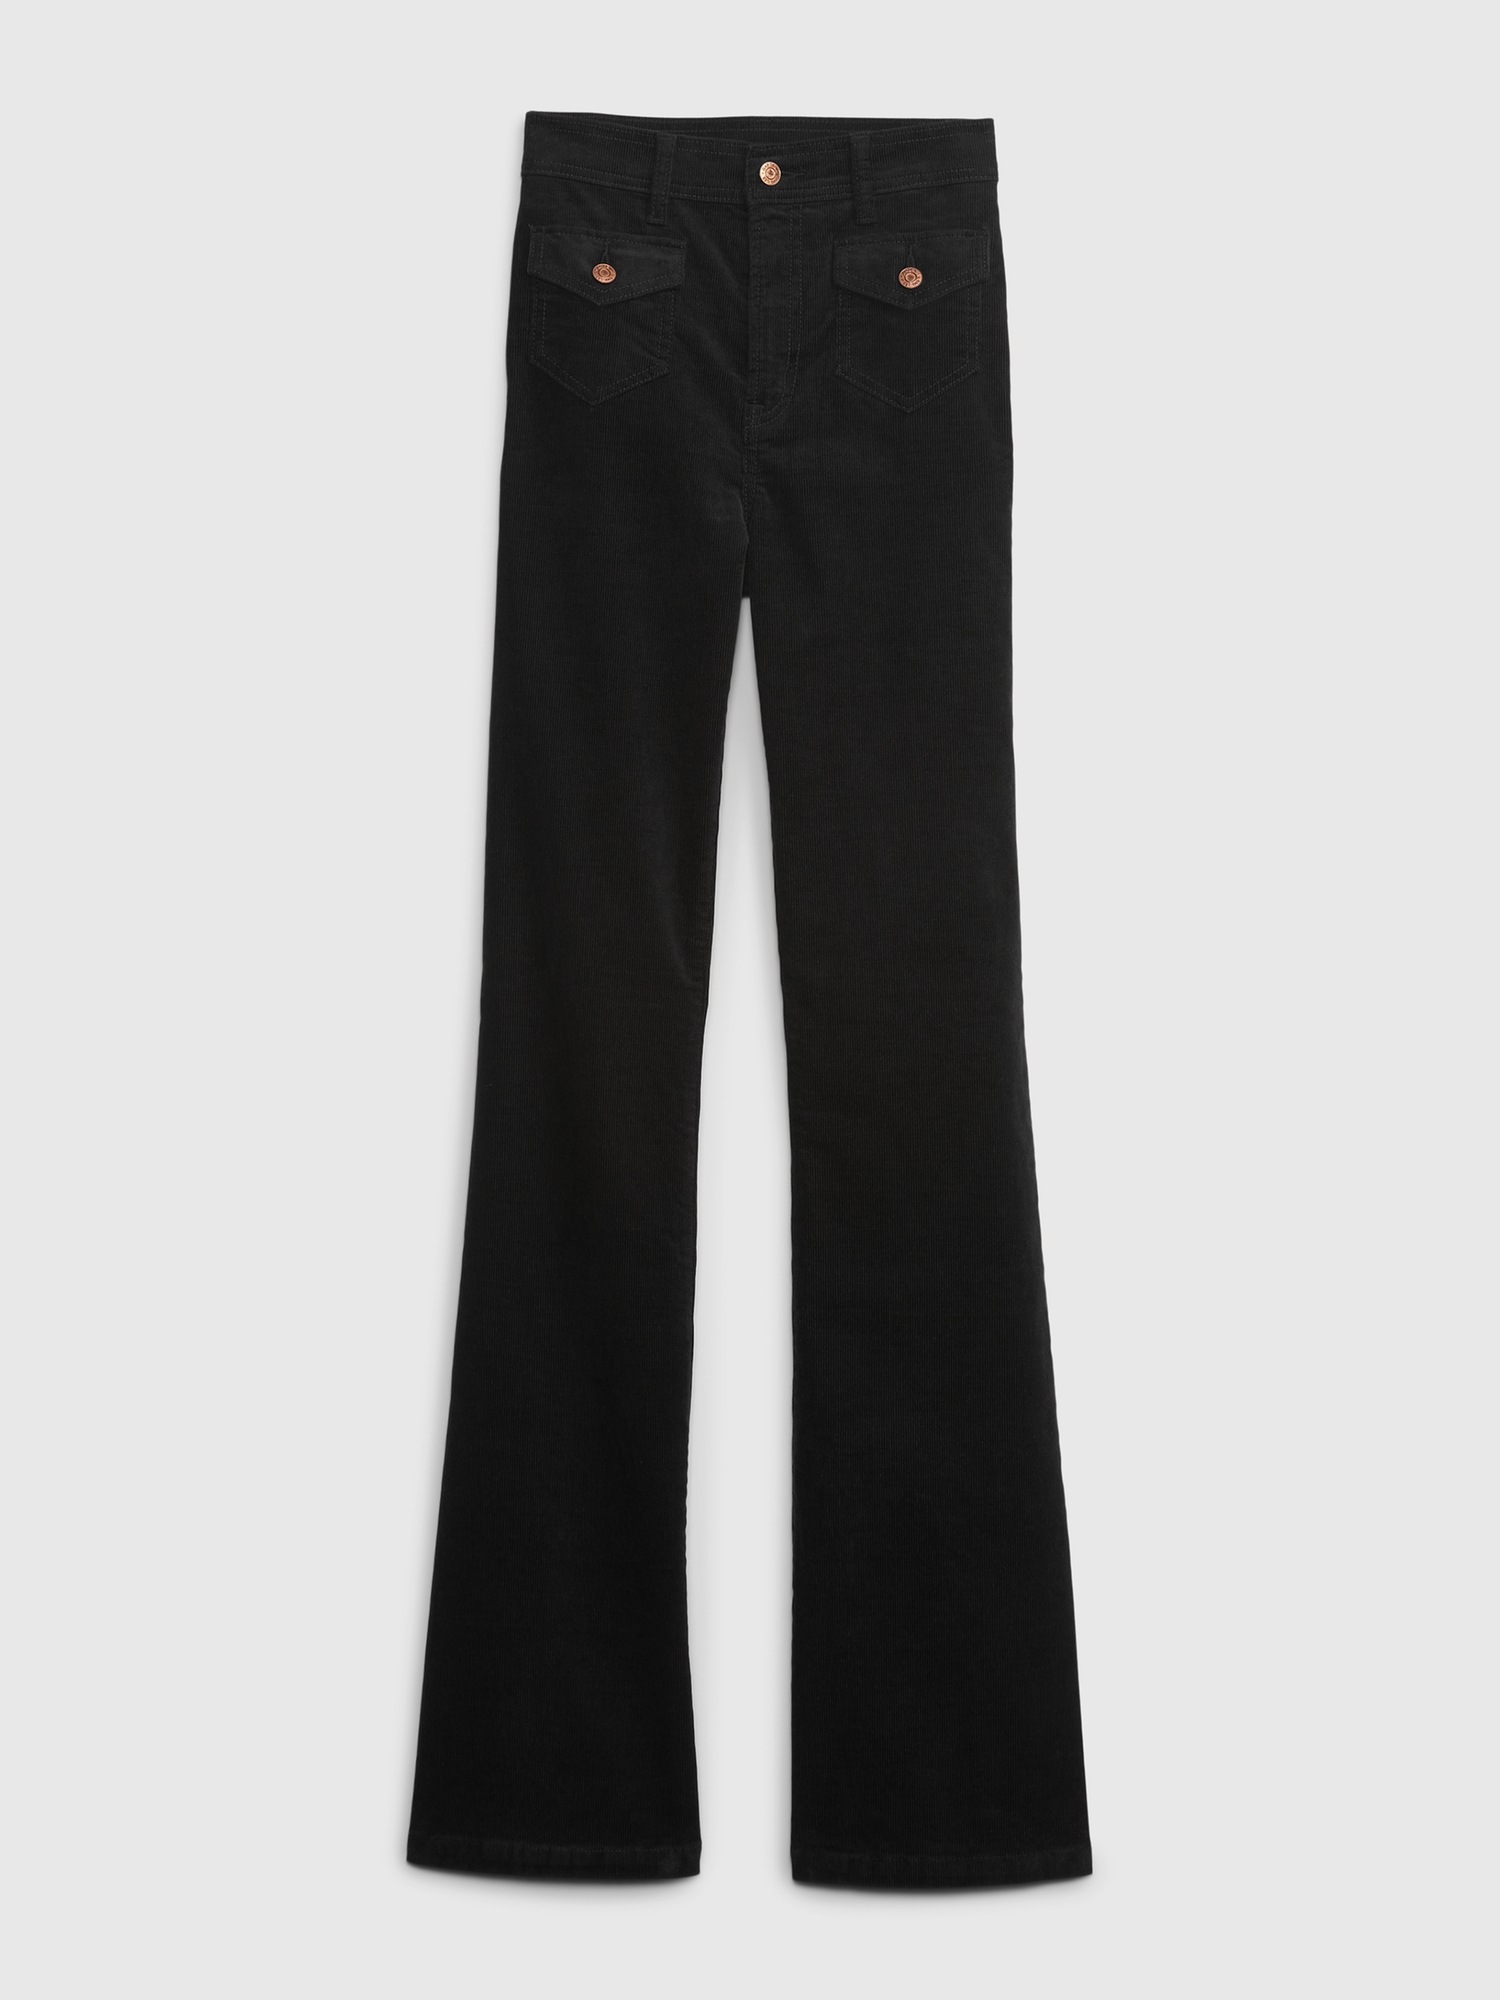 Qualitas Women's Bootleg Trousers Regular Fit, Short Length, Black